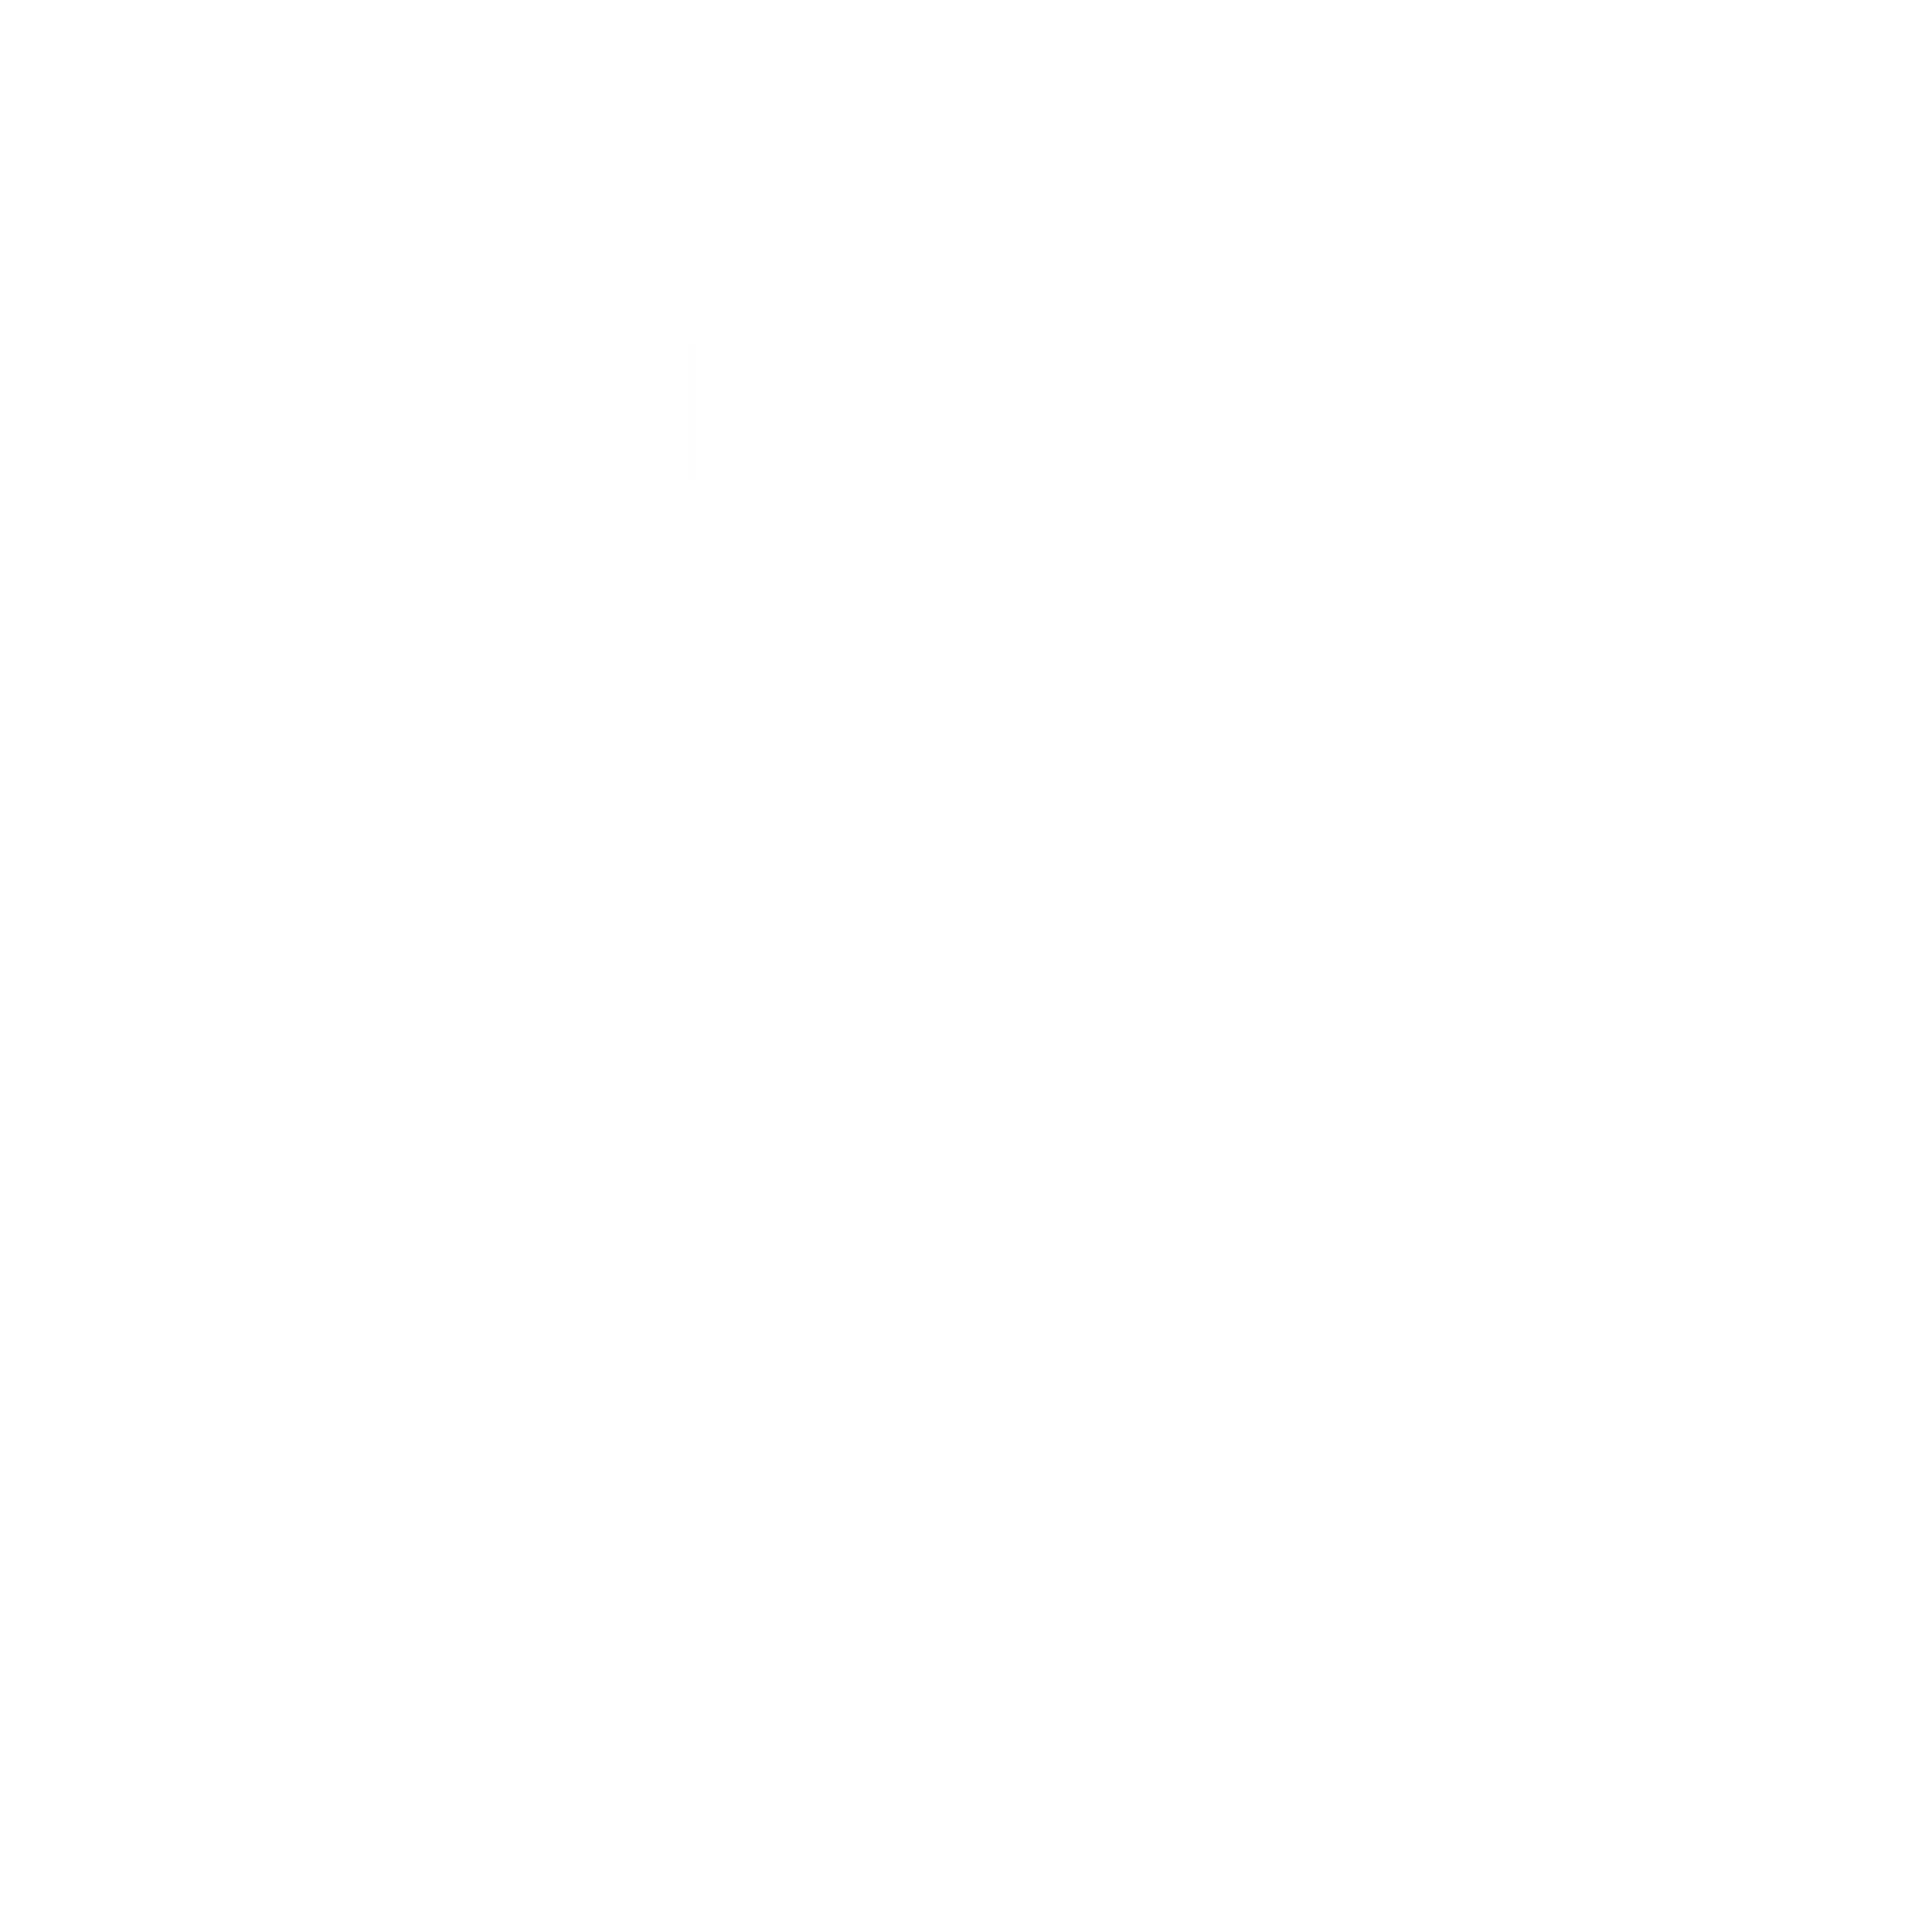 Ryan Learns